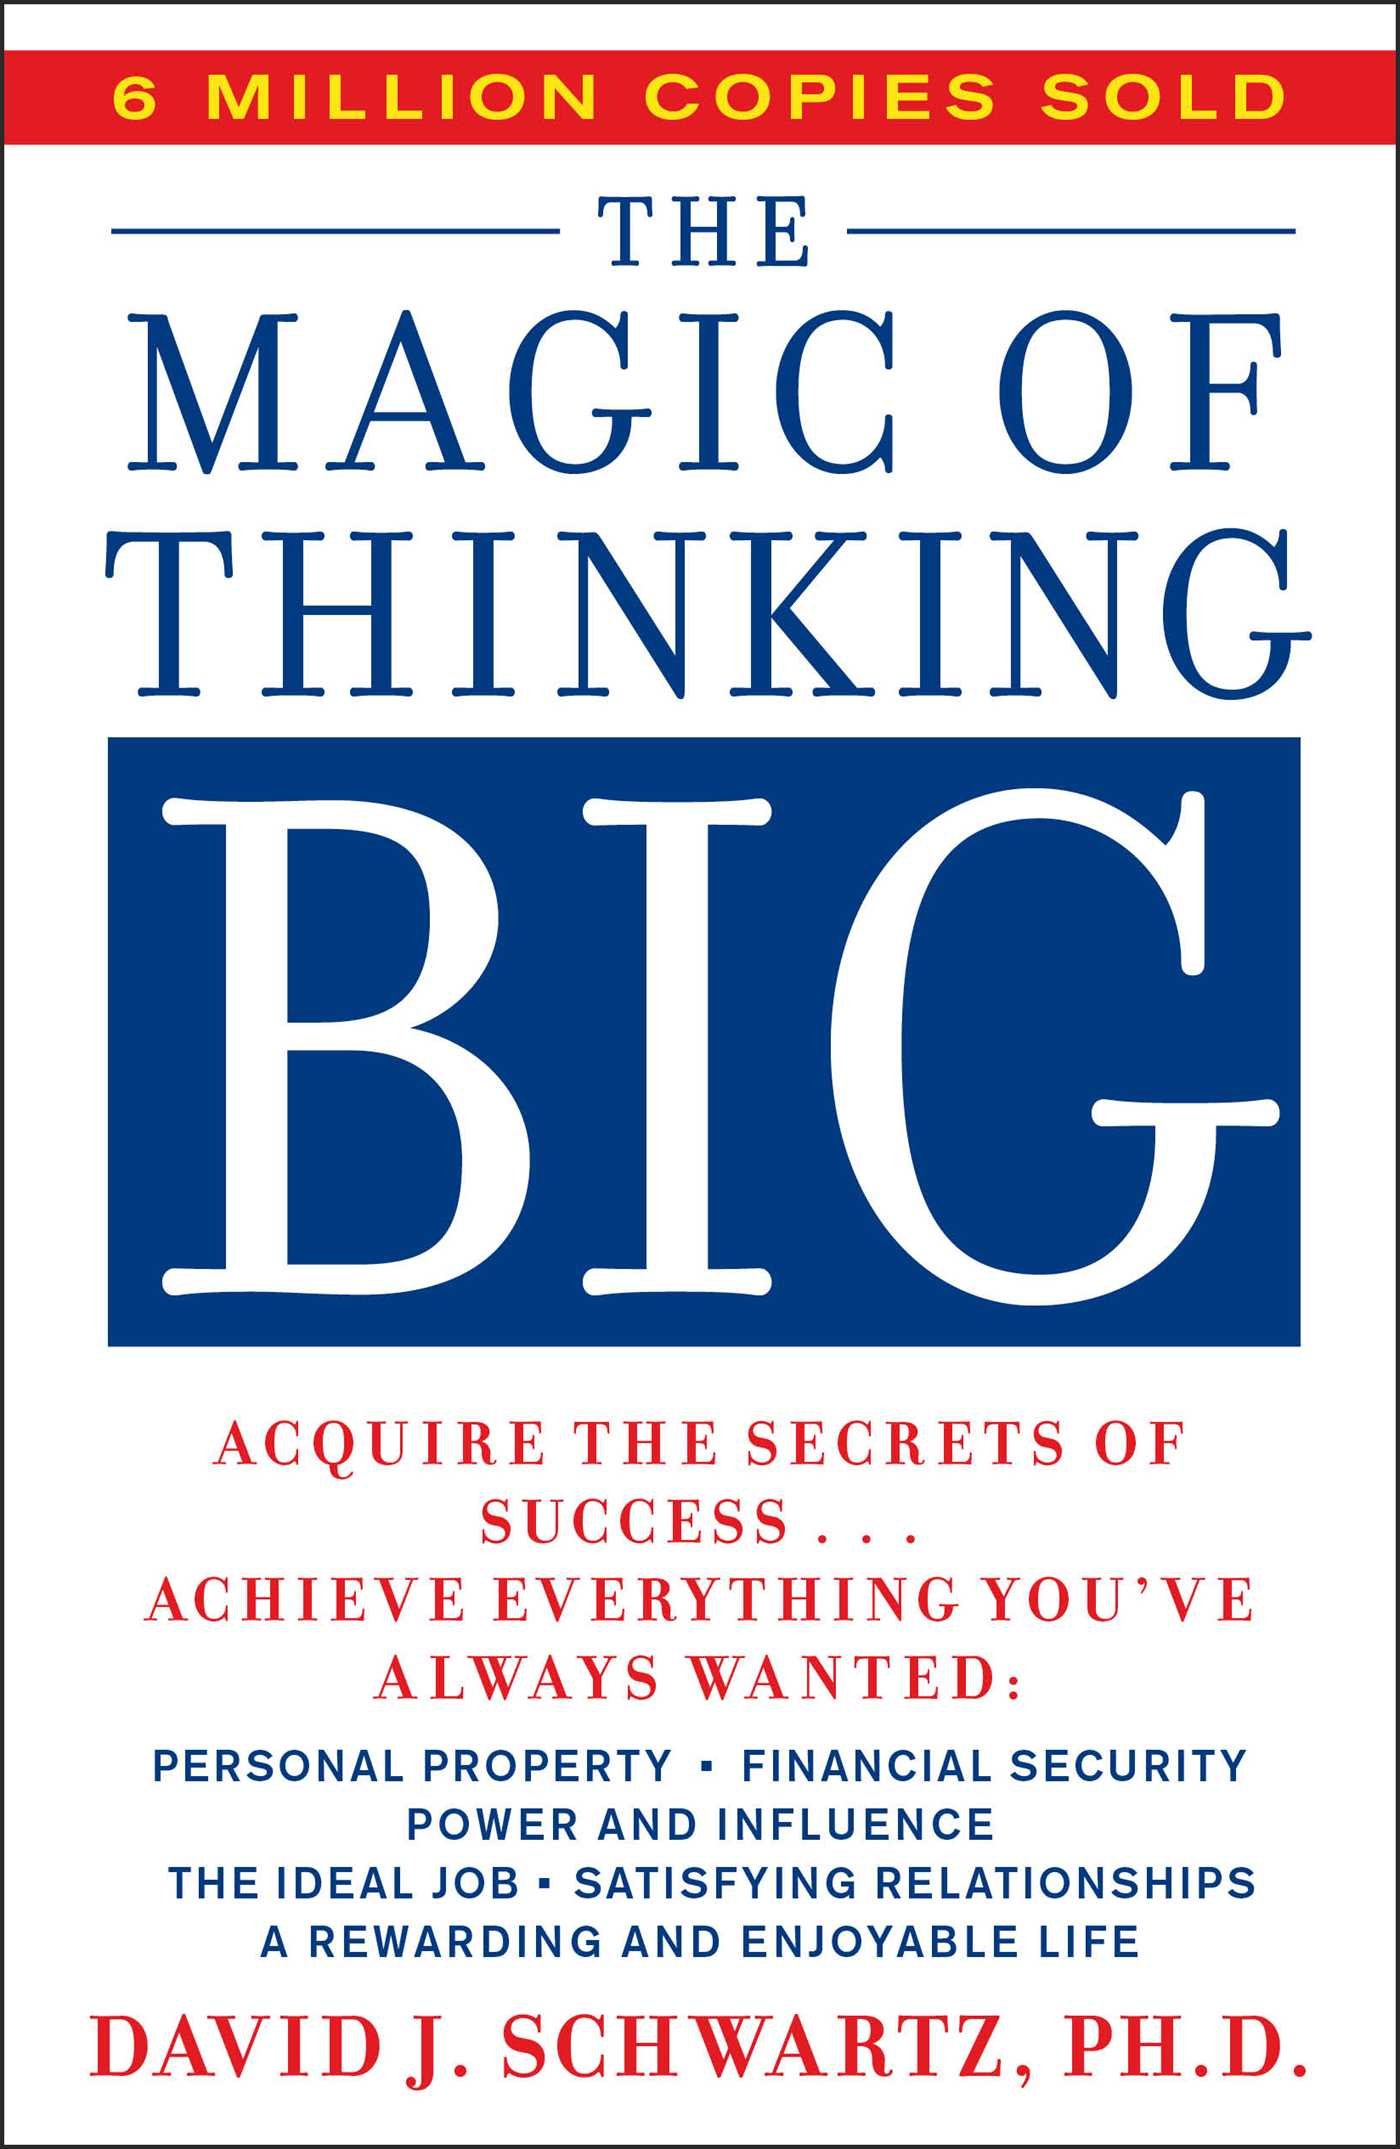  The Magic of Thinking Big (by David J. Schwartz)